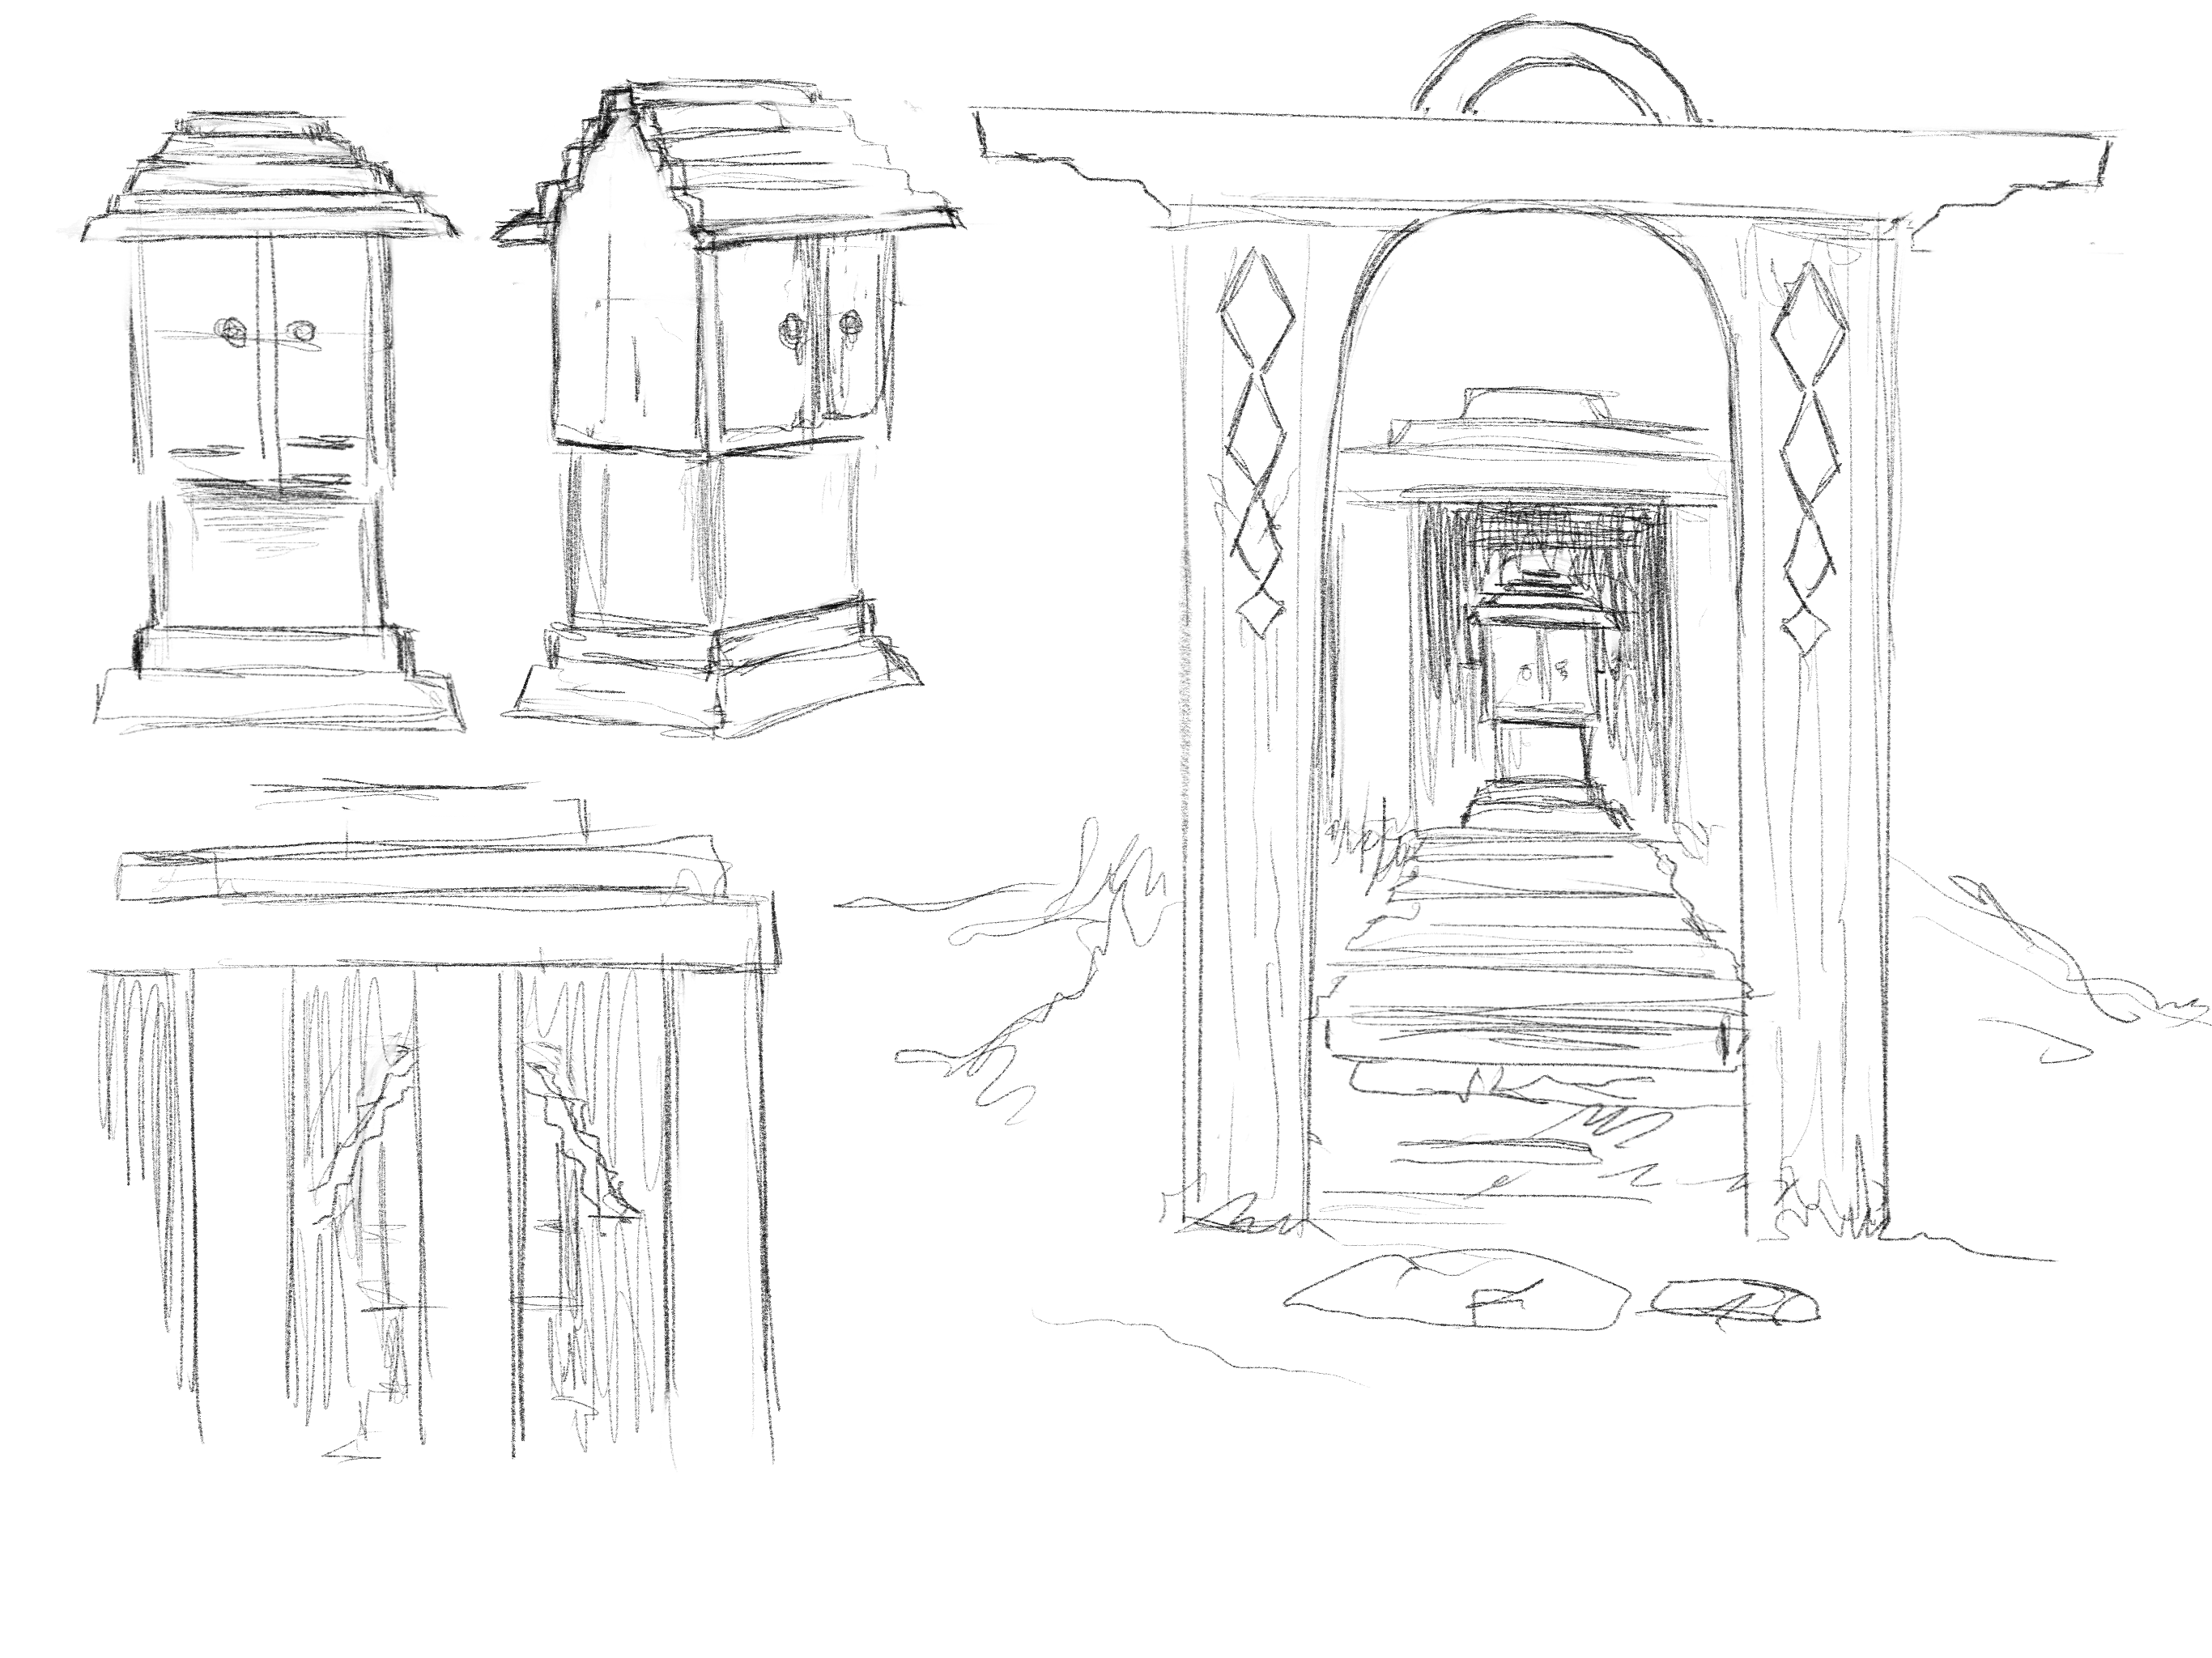 Initial Shrine Concepts